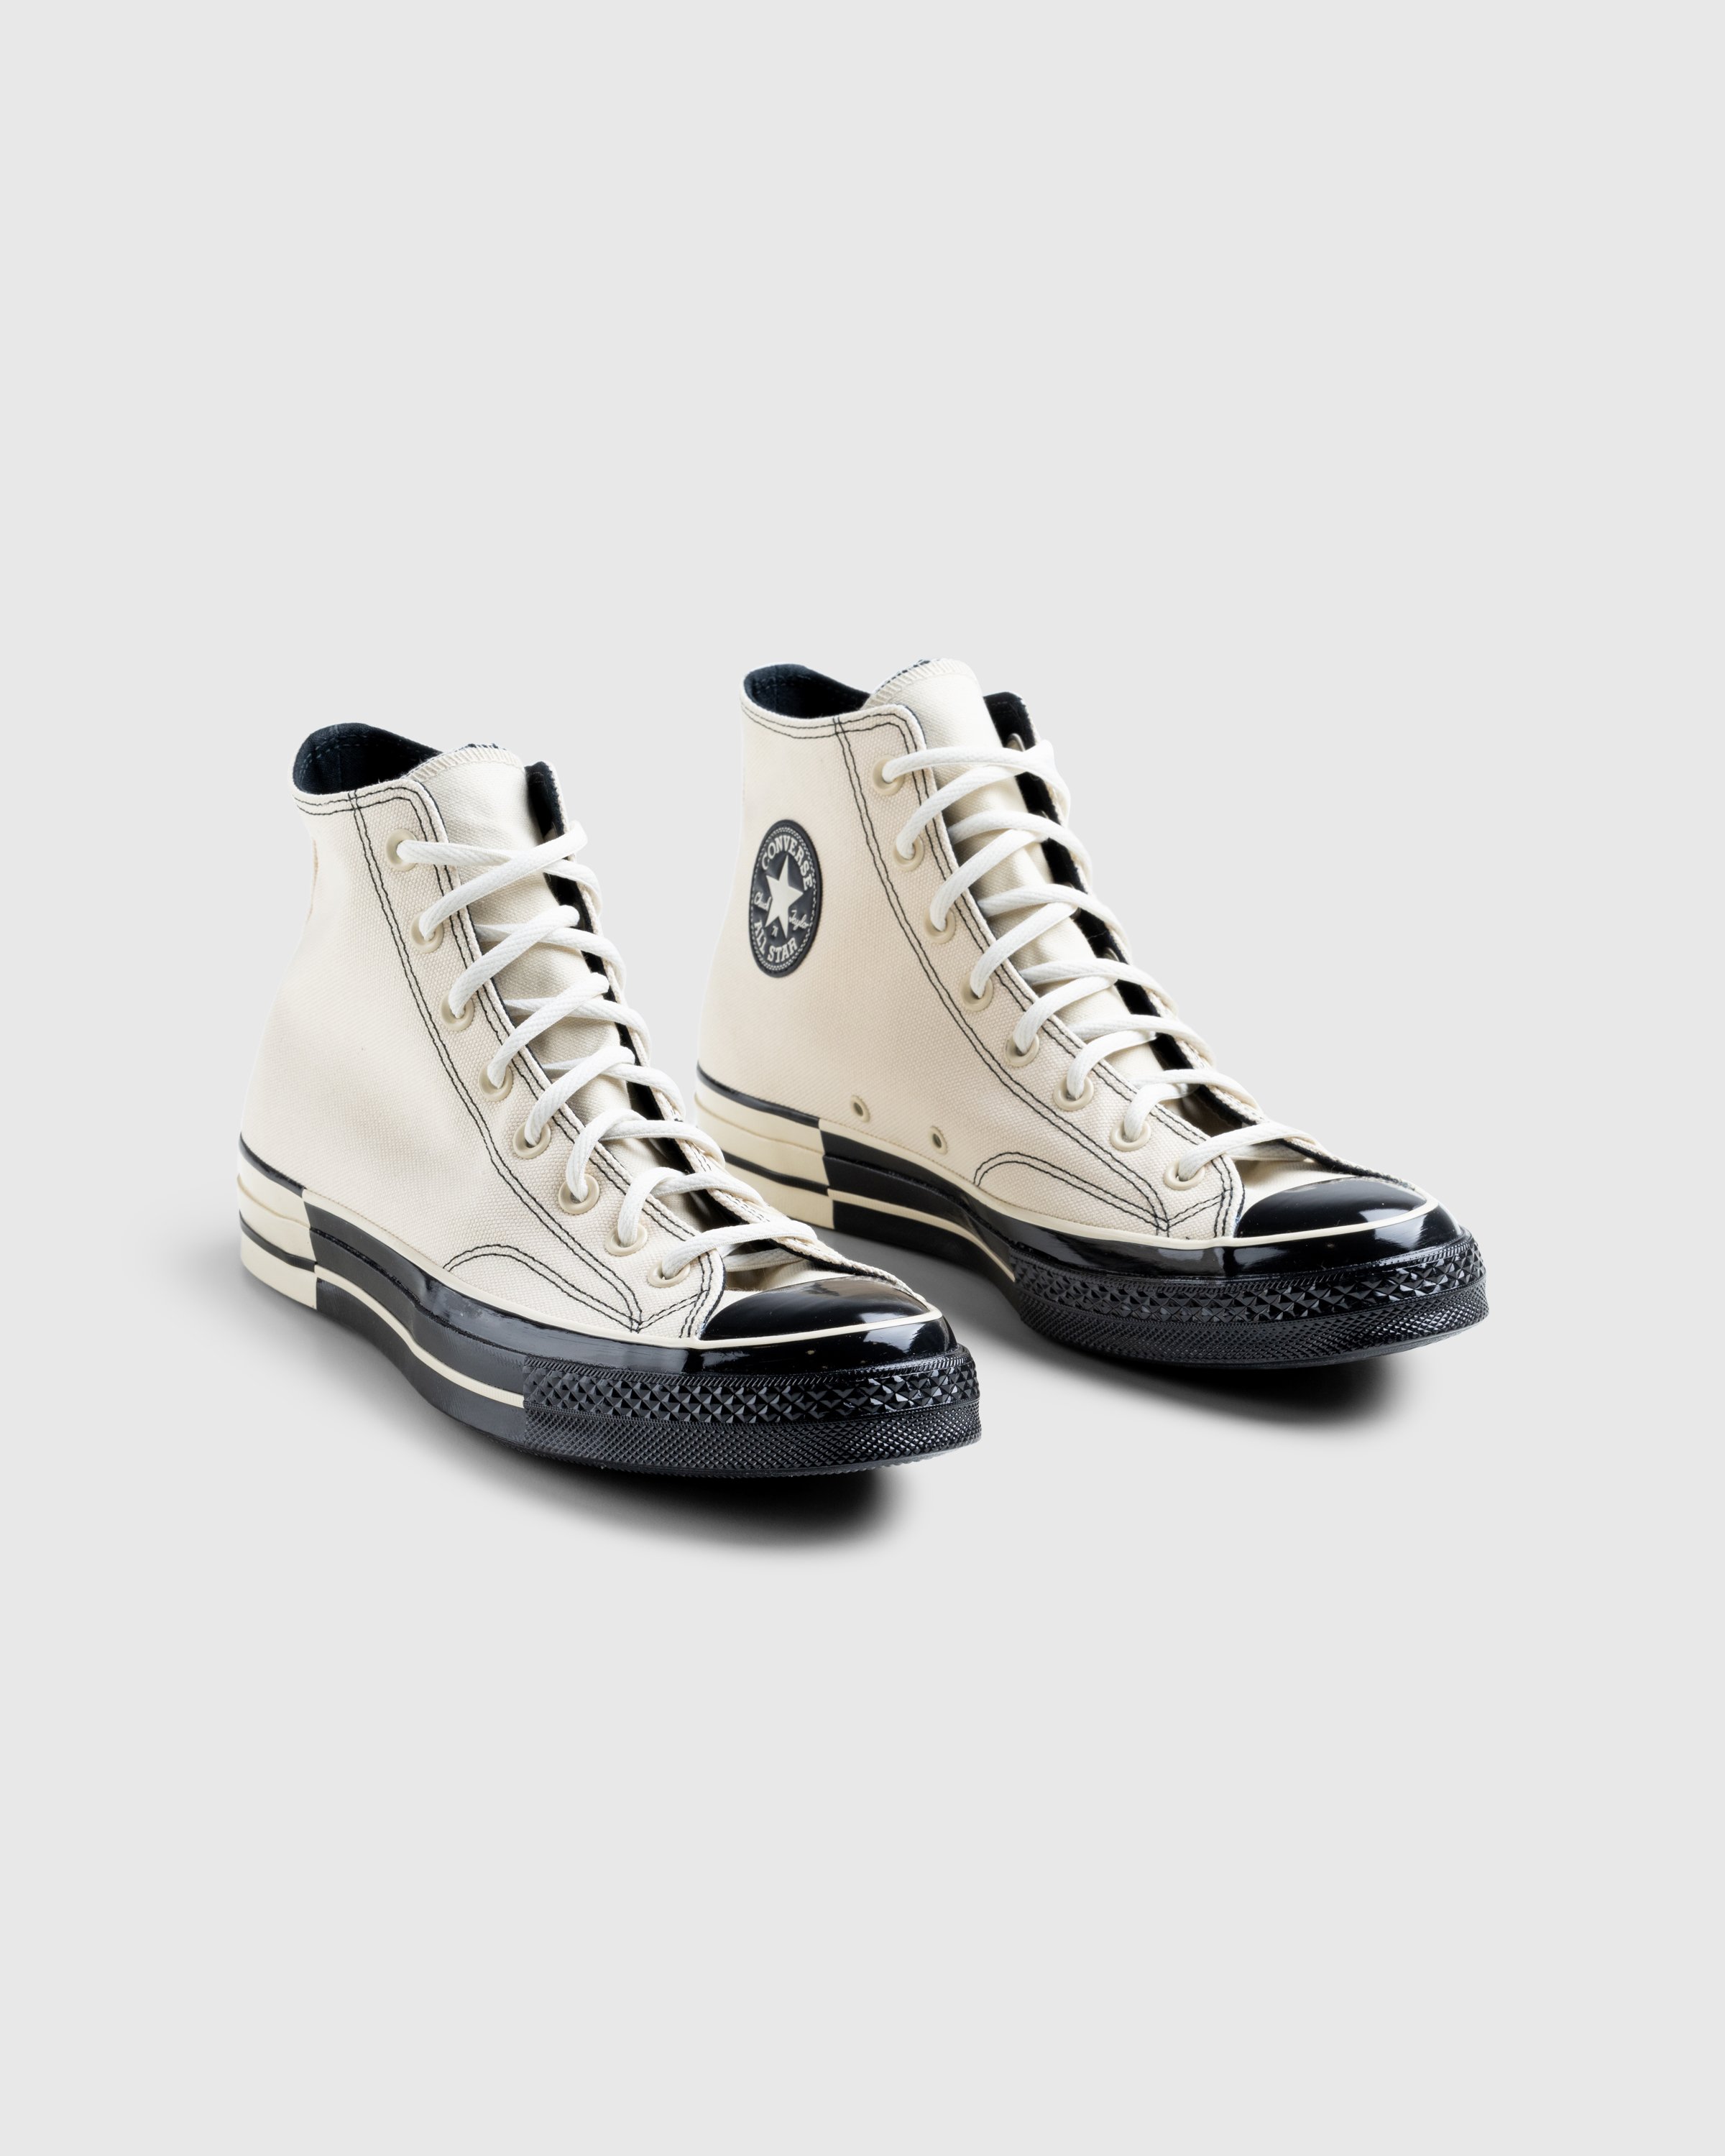 Converse - CHUCK 70 HI NATURAL IVORY/BLACK - Footwear - White - Image 3